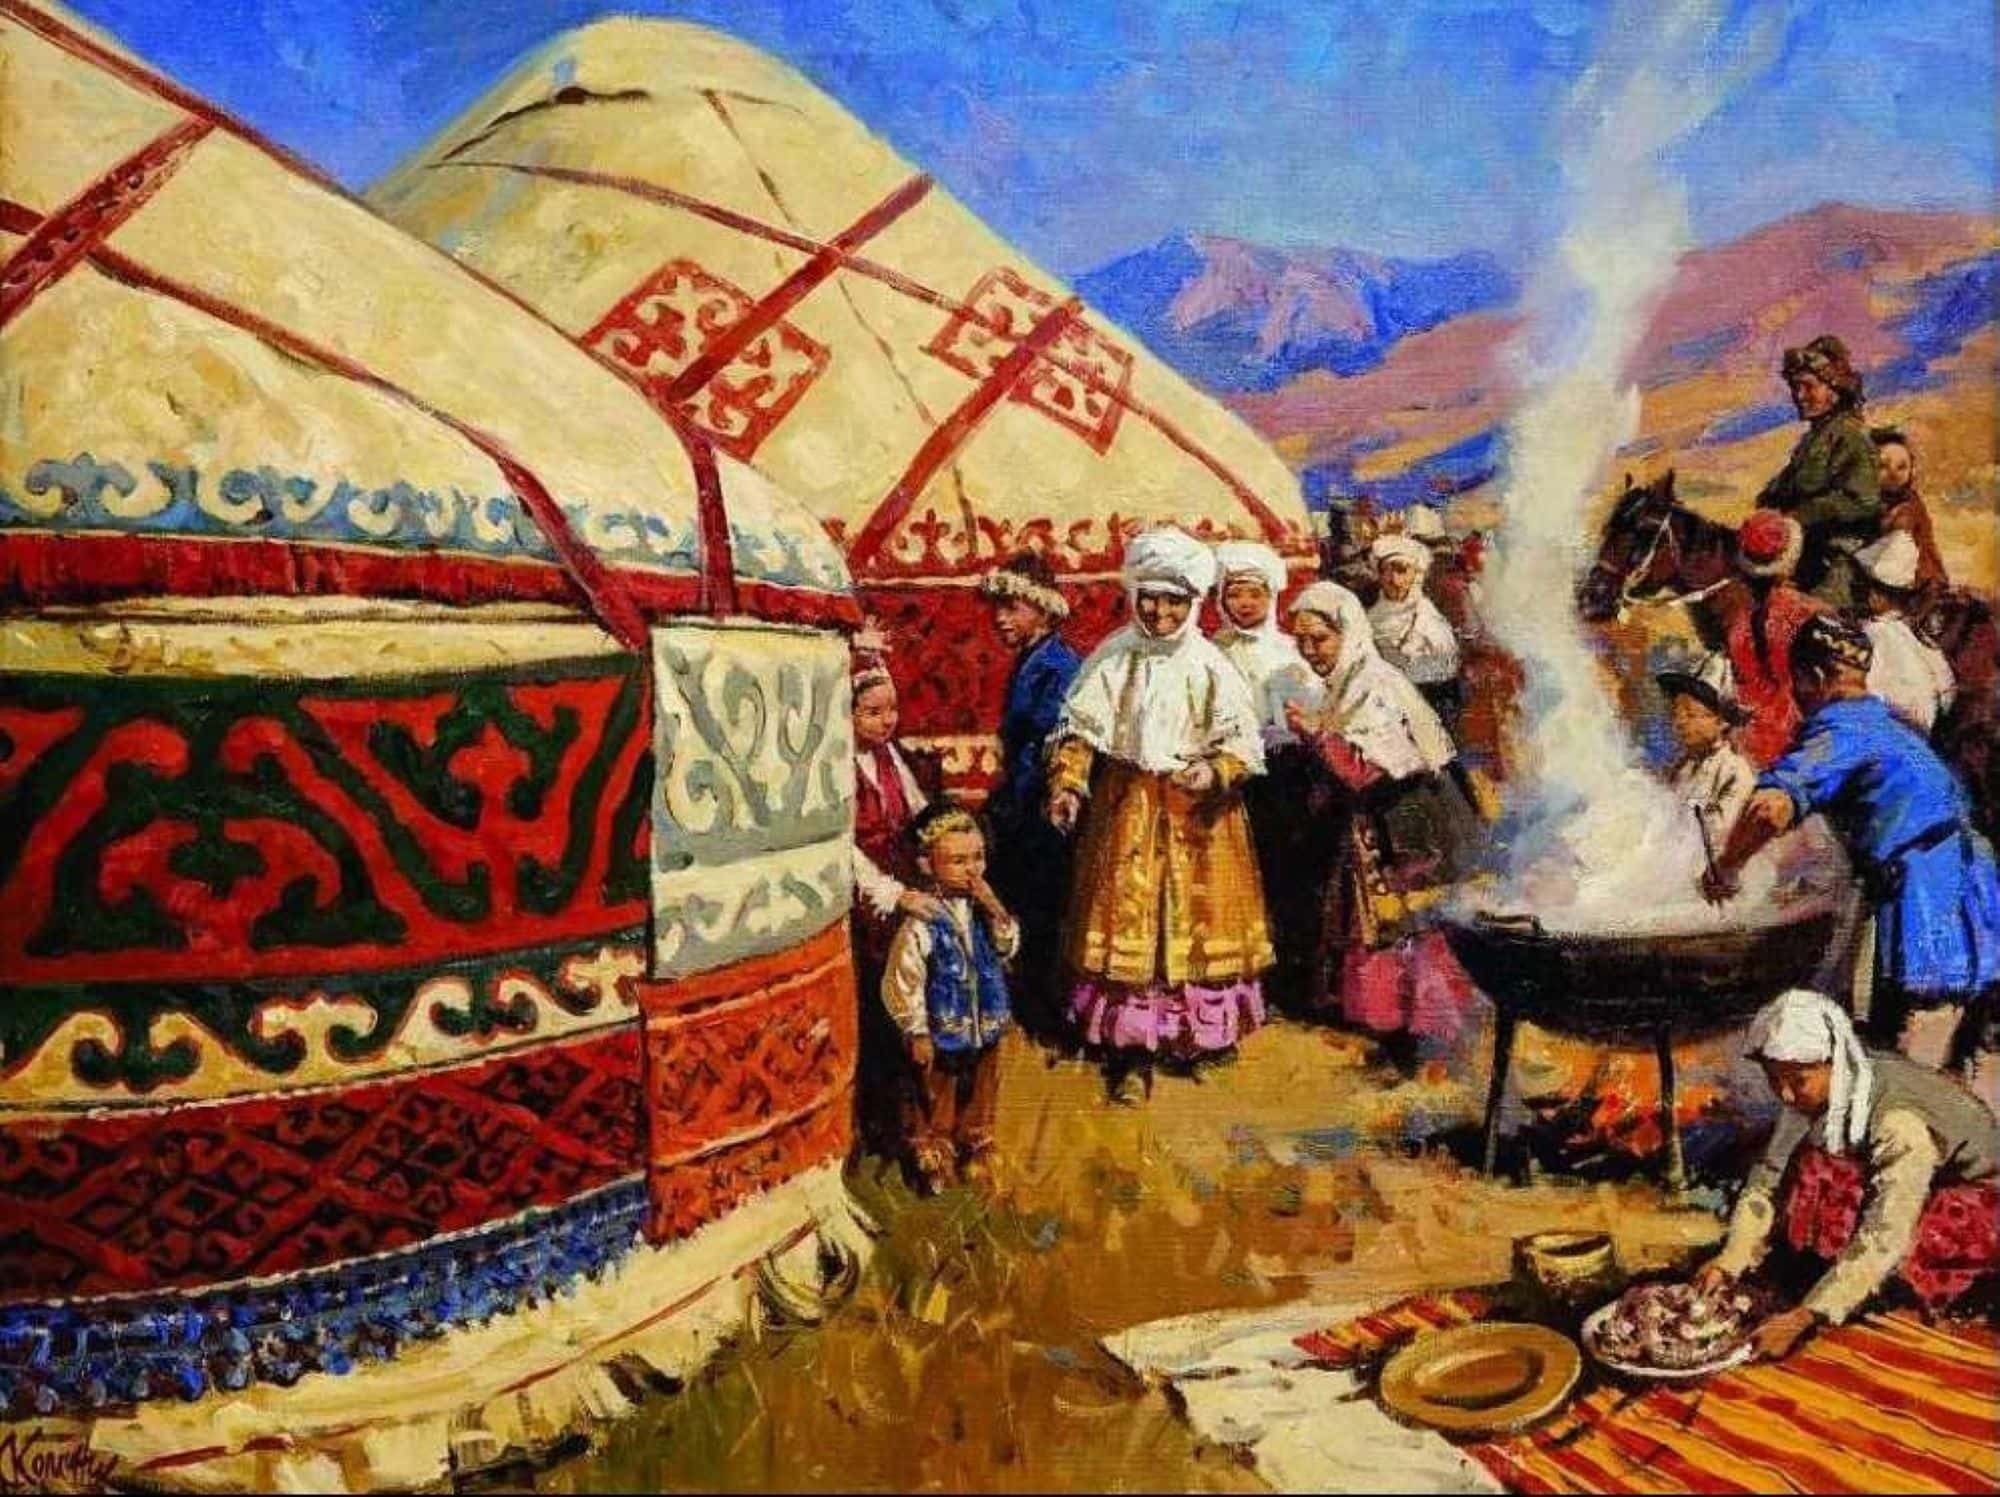 Kazakh traditional. Культура казахов. Казахстан культура и традиции. Казахский народ. Традиционная культура казахов.